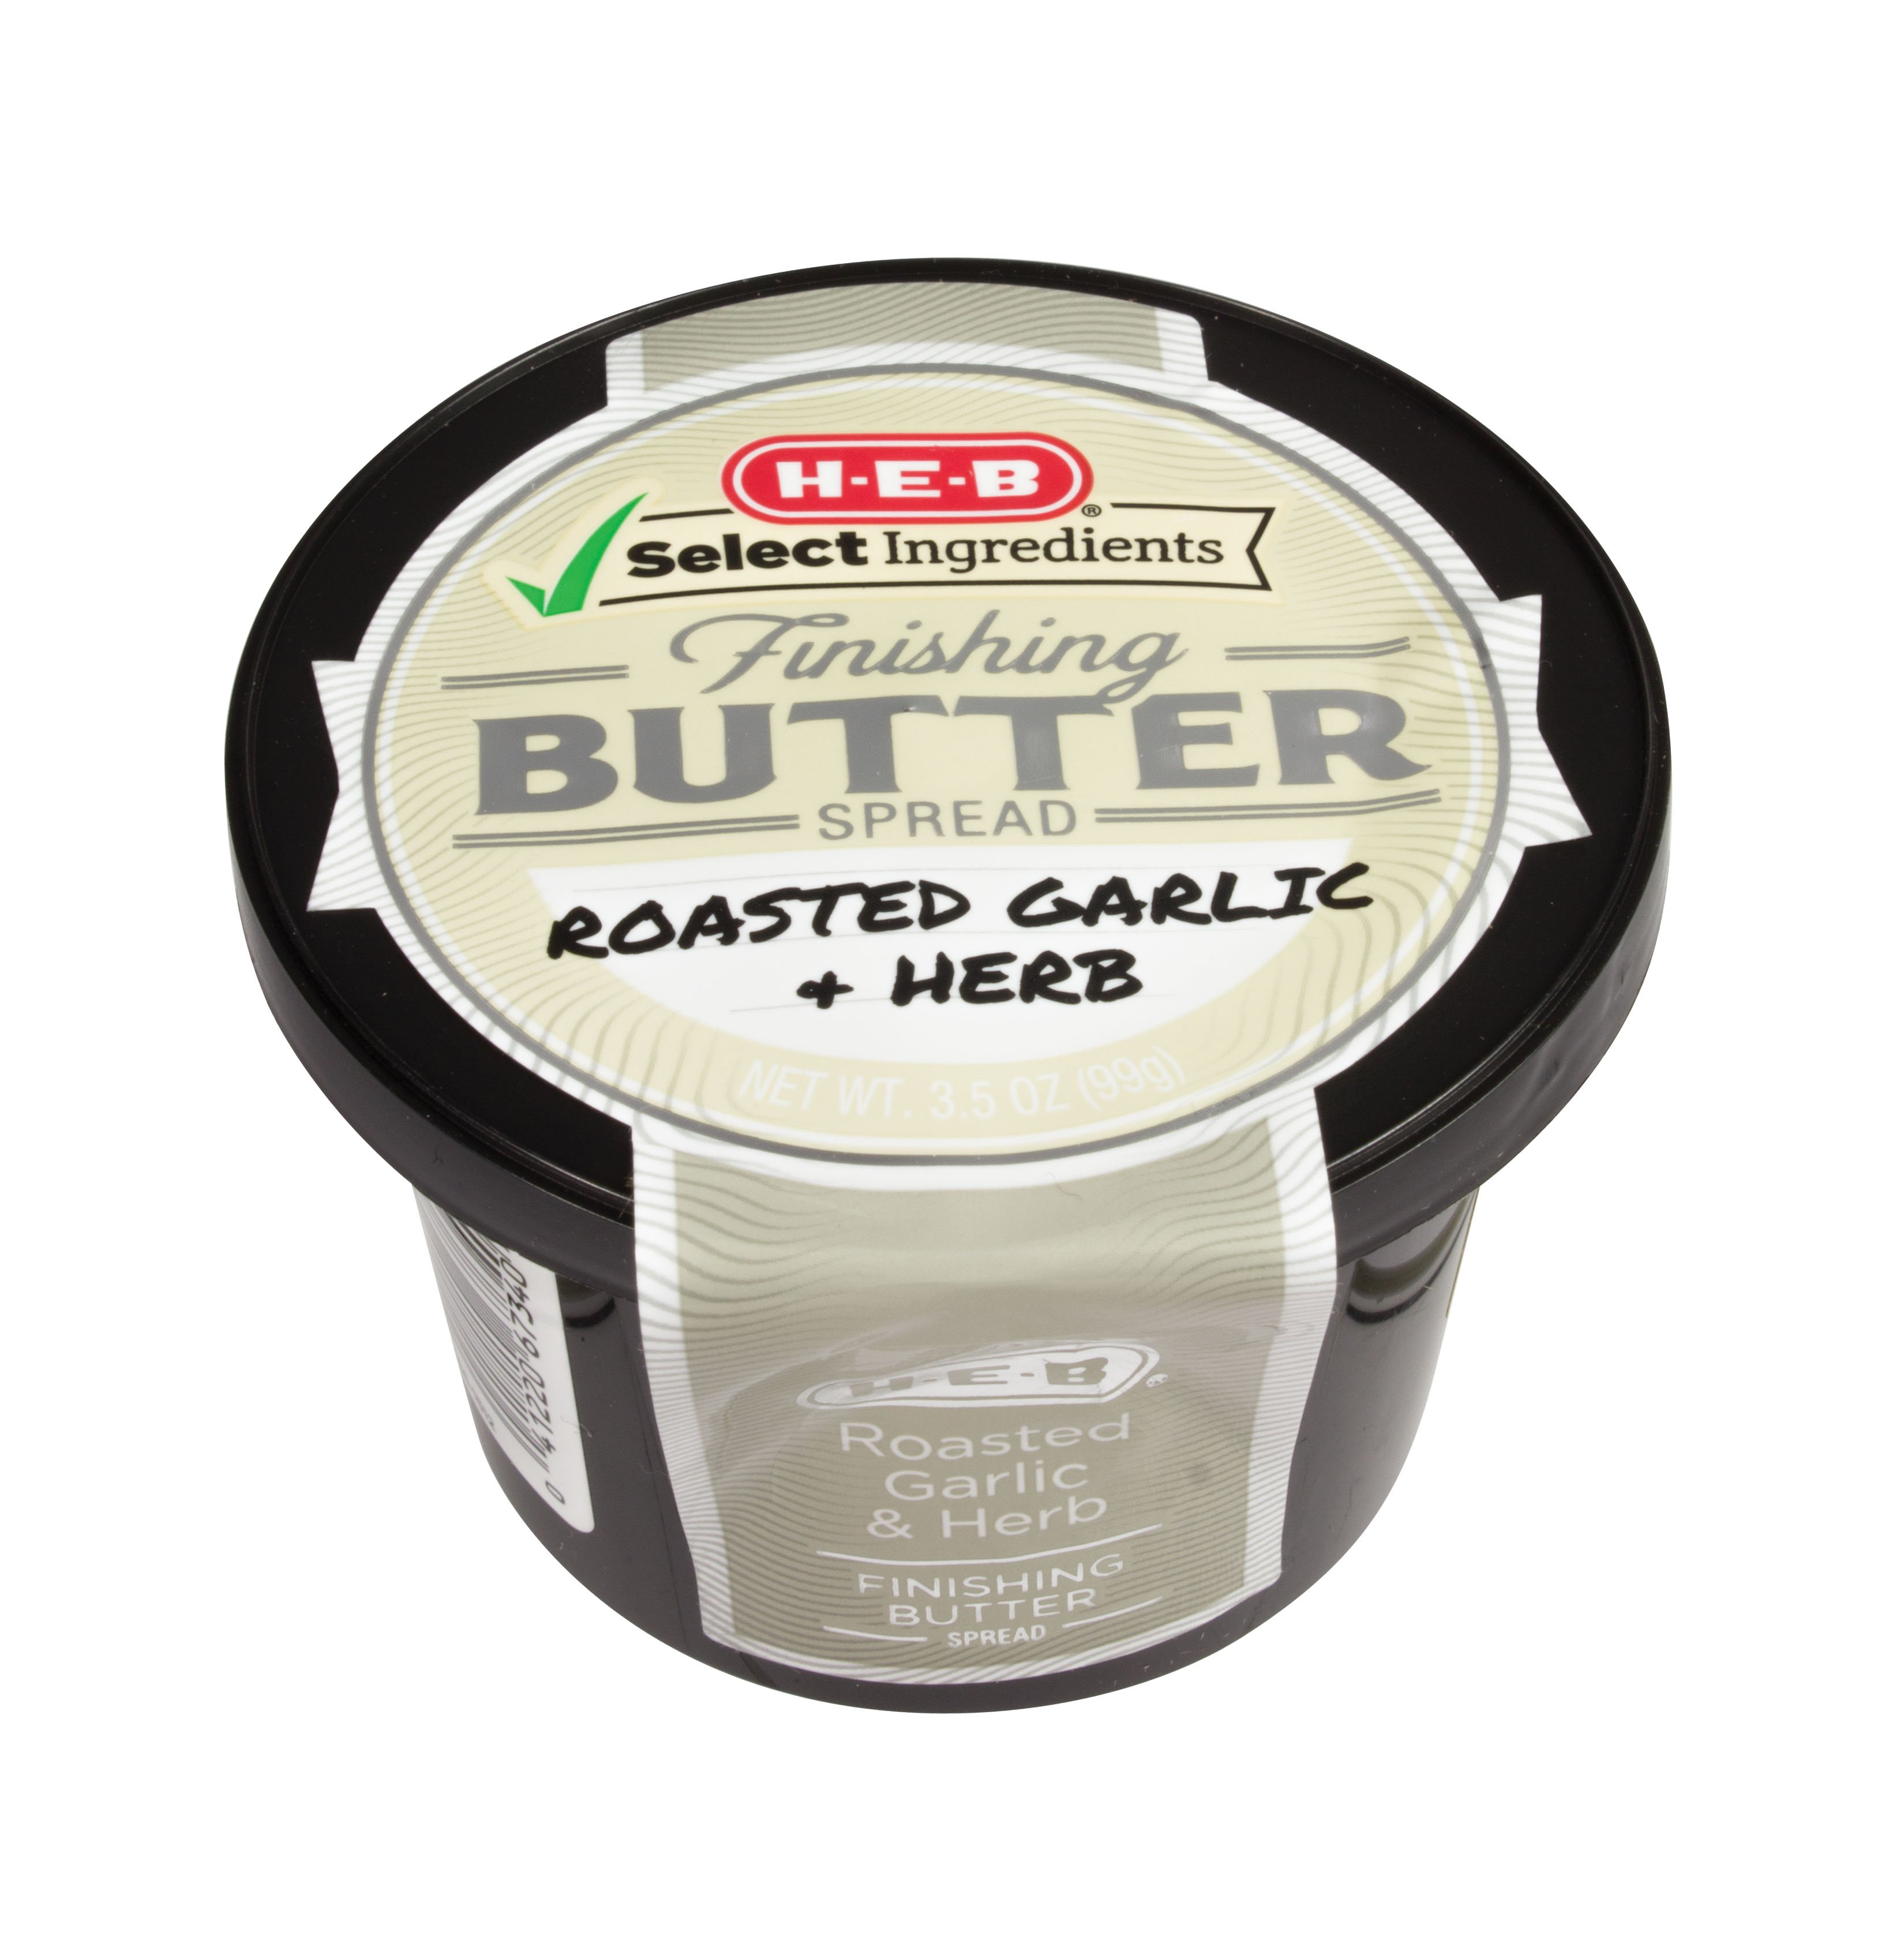 Garlic Herb Butter